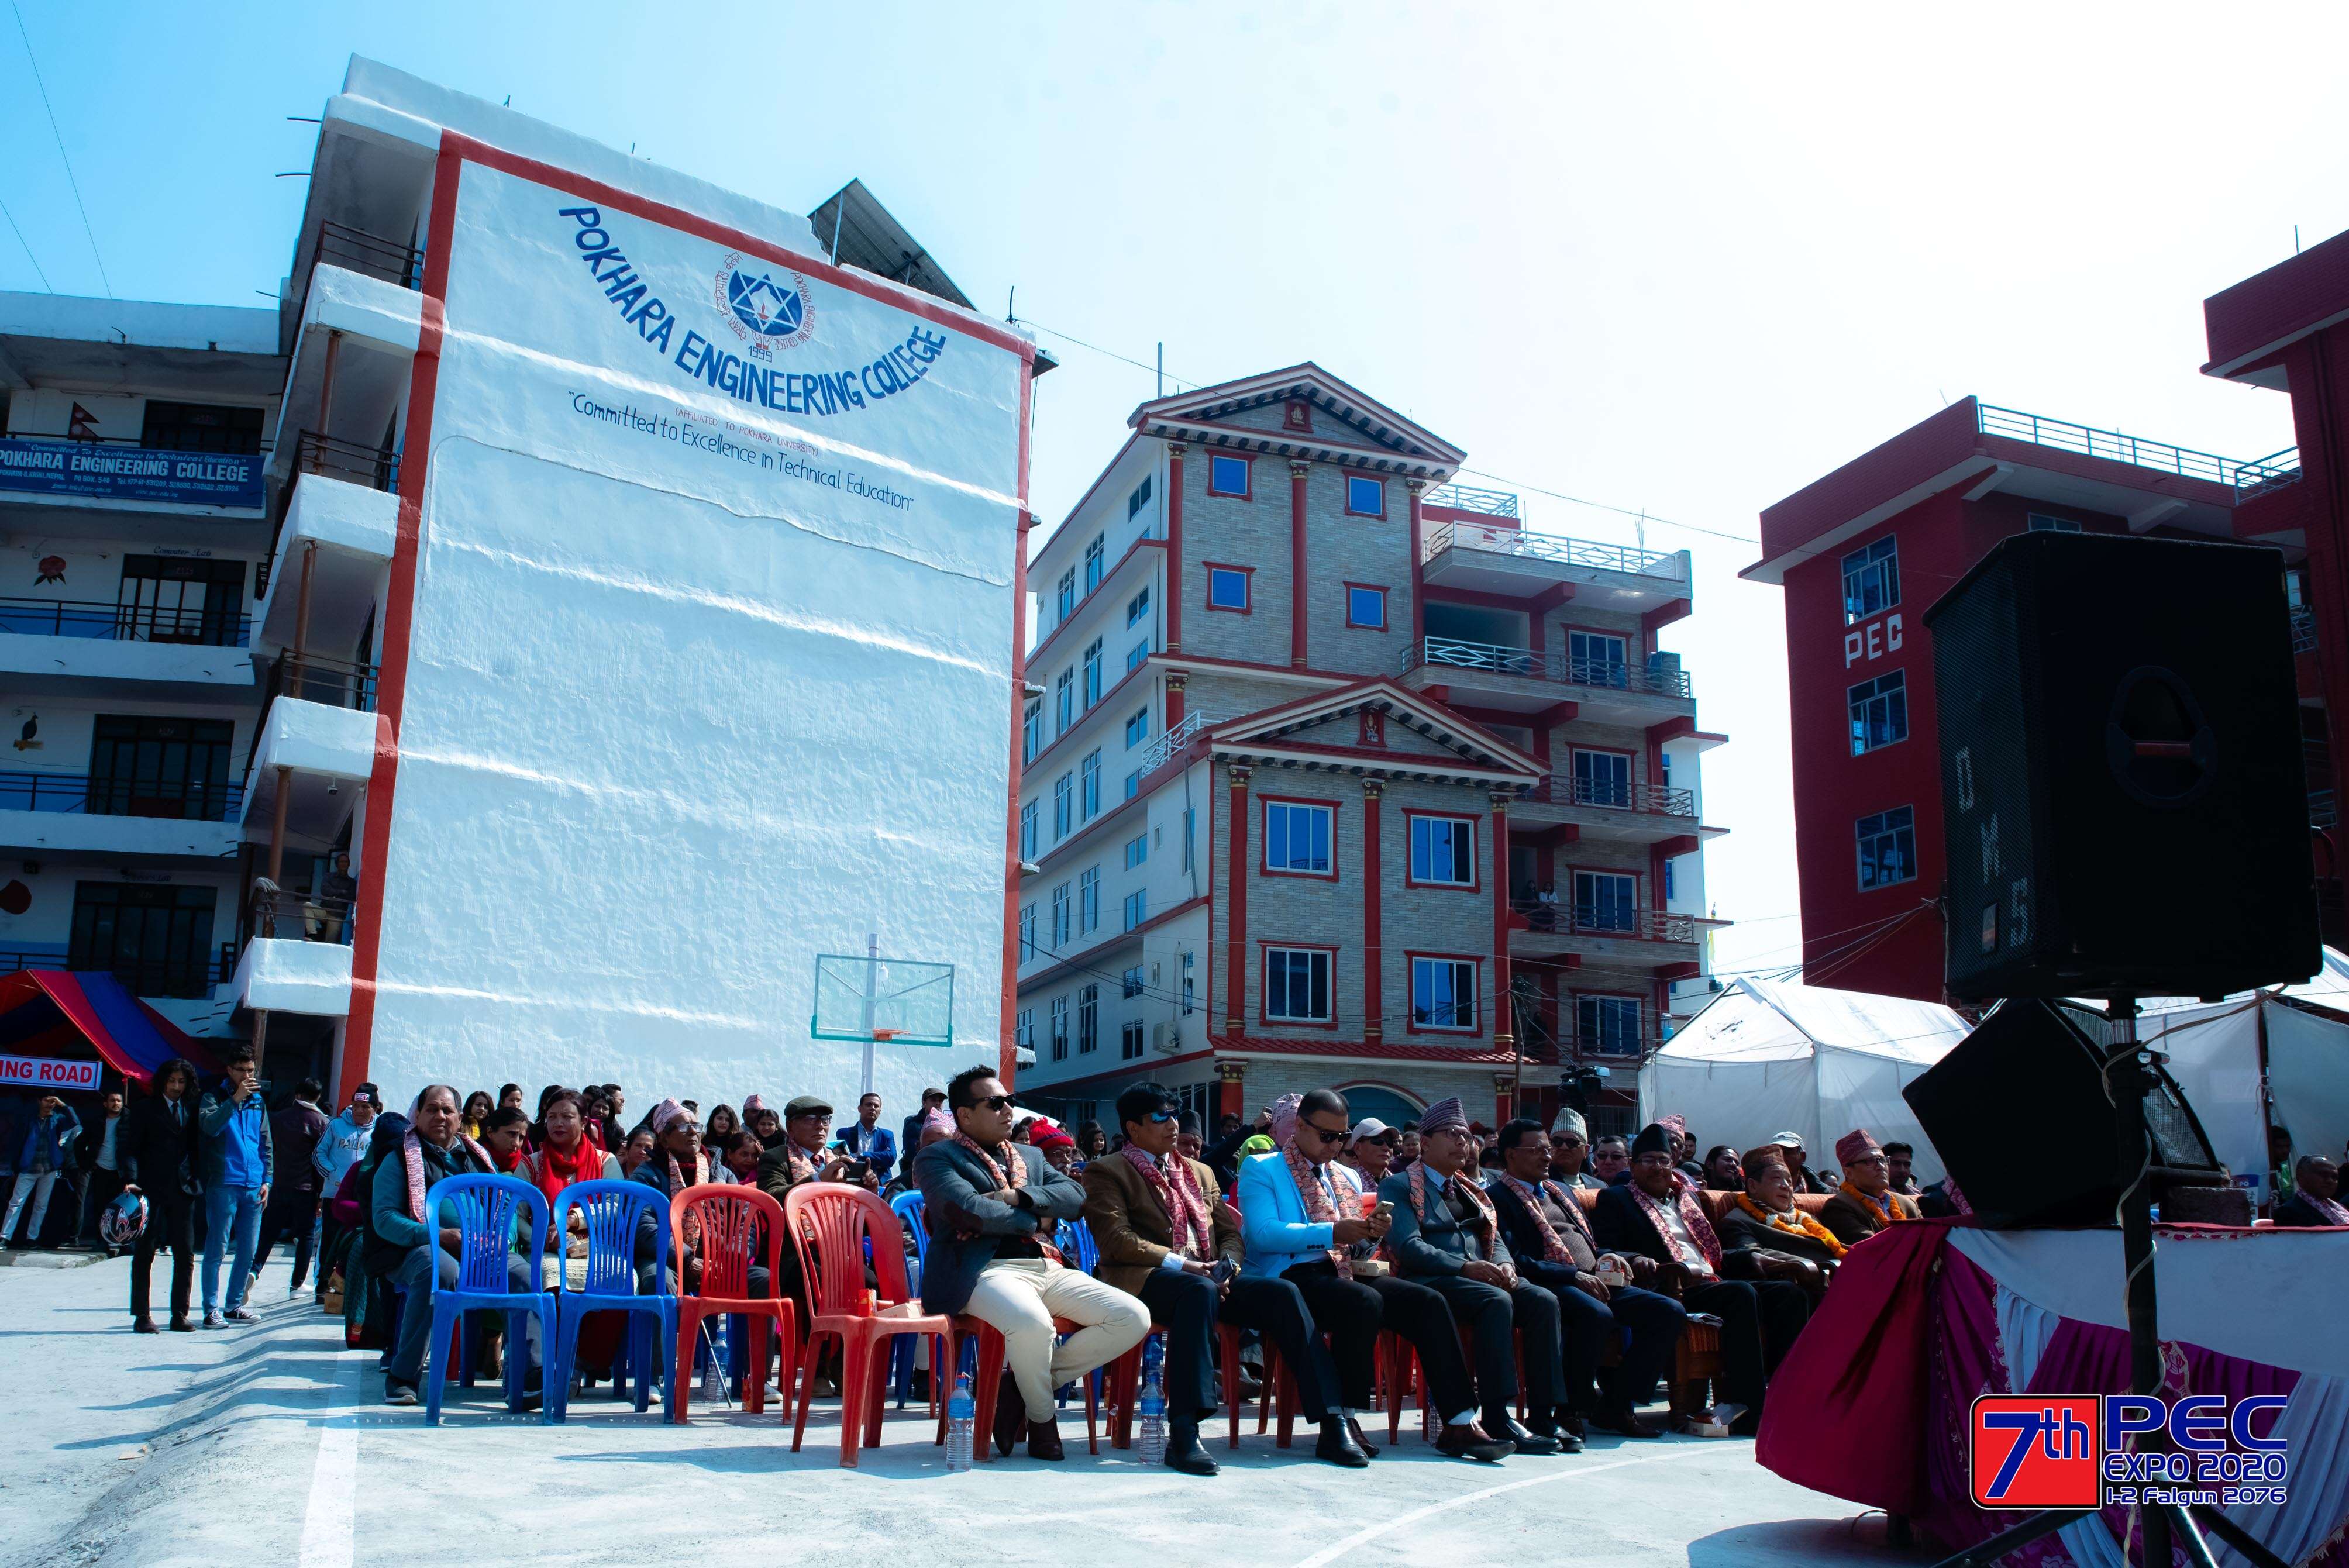 Pokhara Engineering College